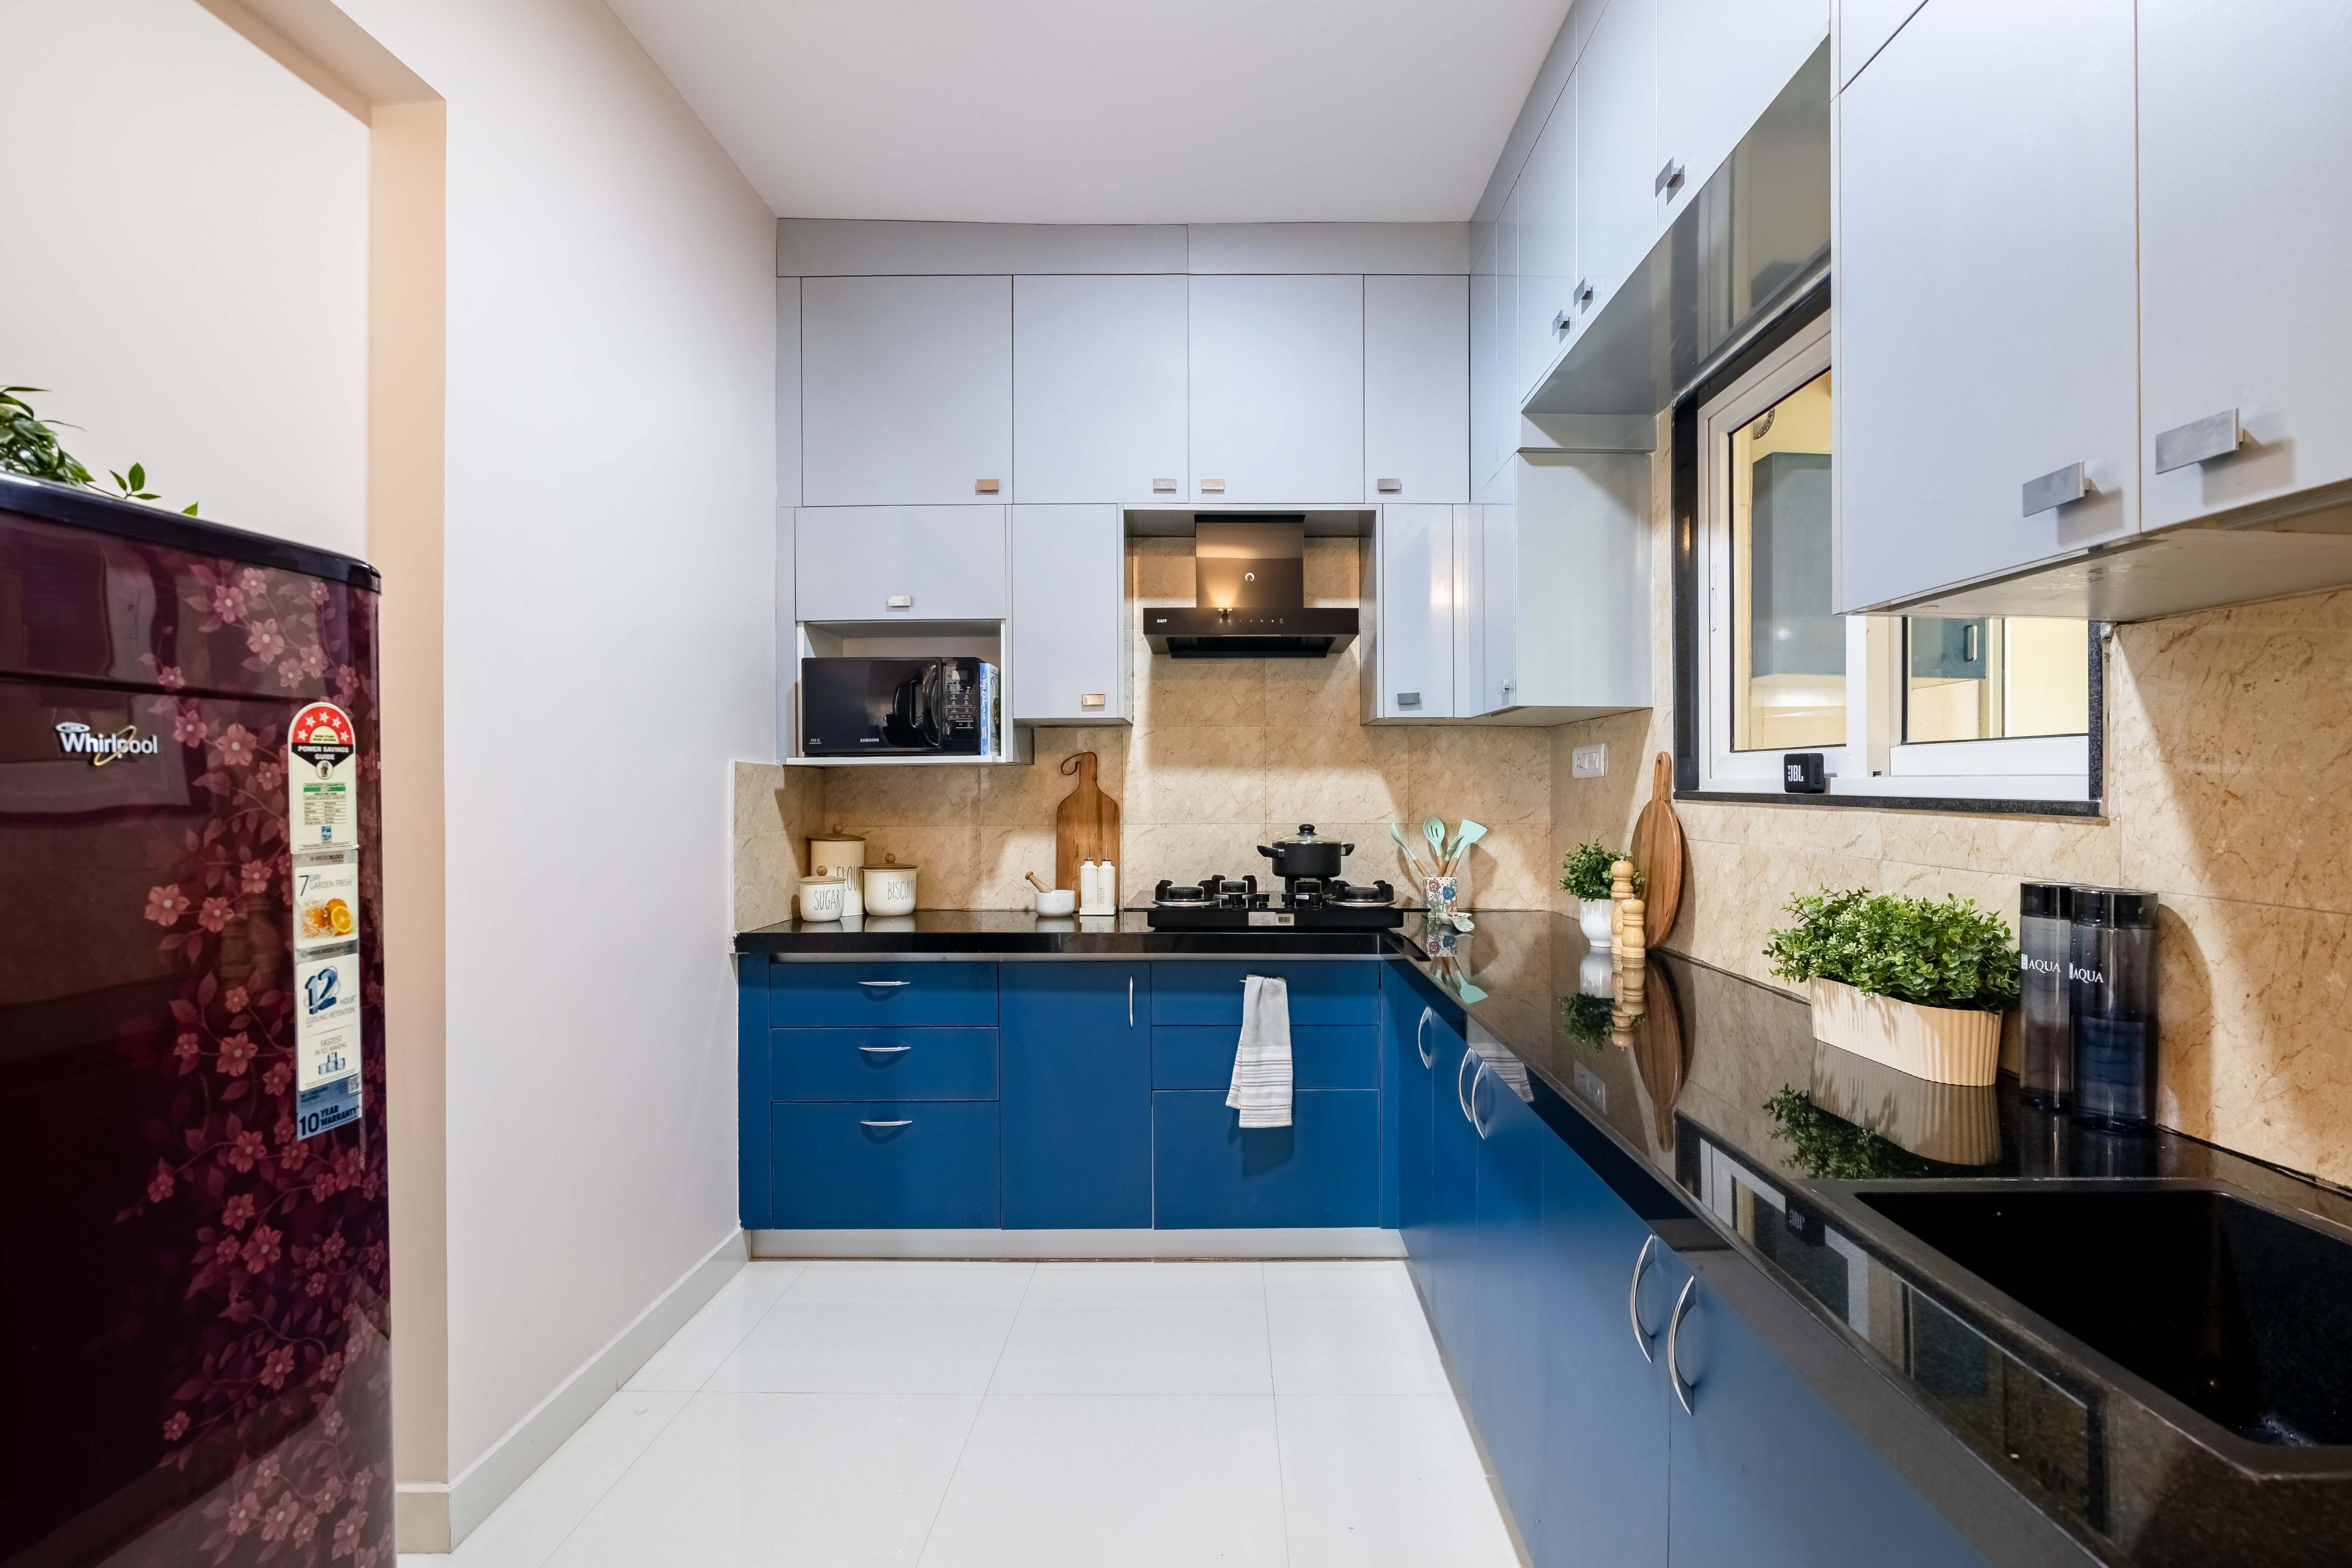 Modern Kitchen Design With A Black Granite Countertop